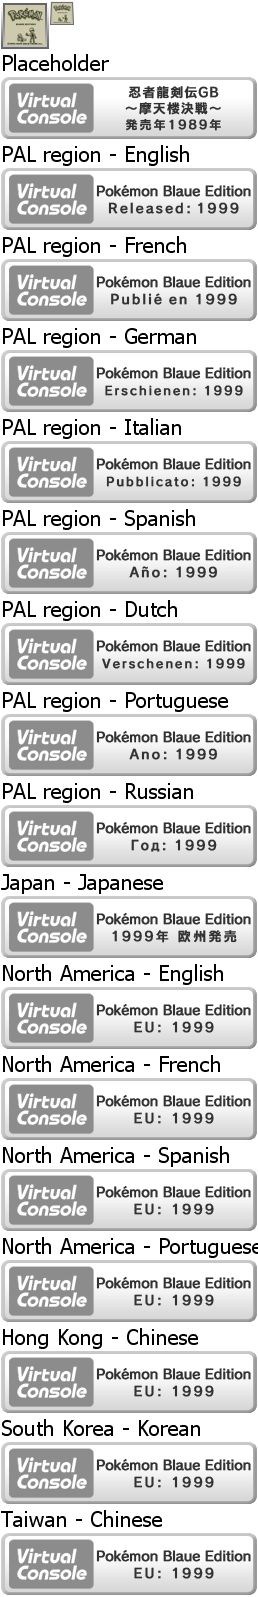 Virtual Console - Pokémon Blaue Edition